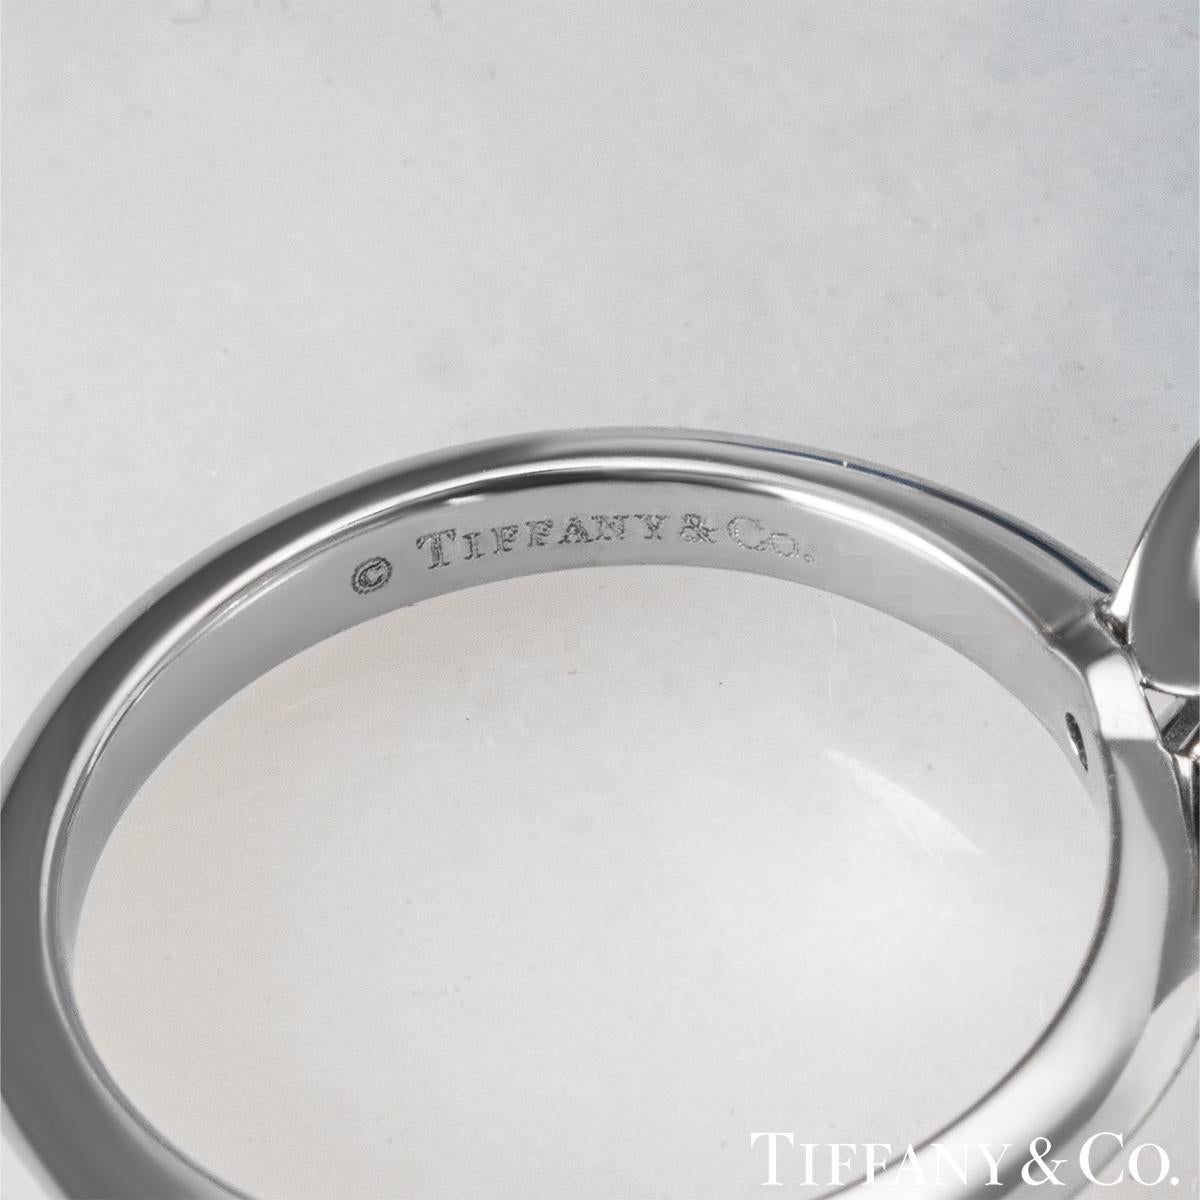 tiffany square engagement ring